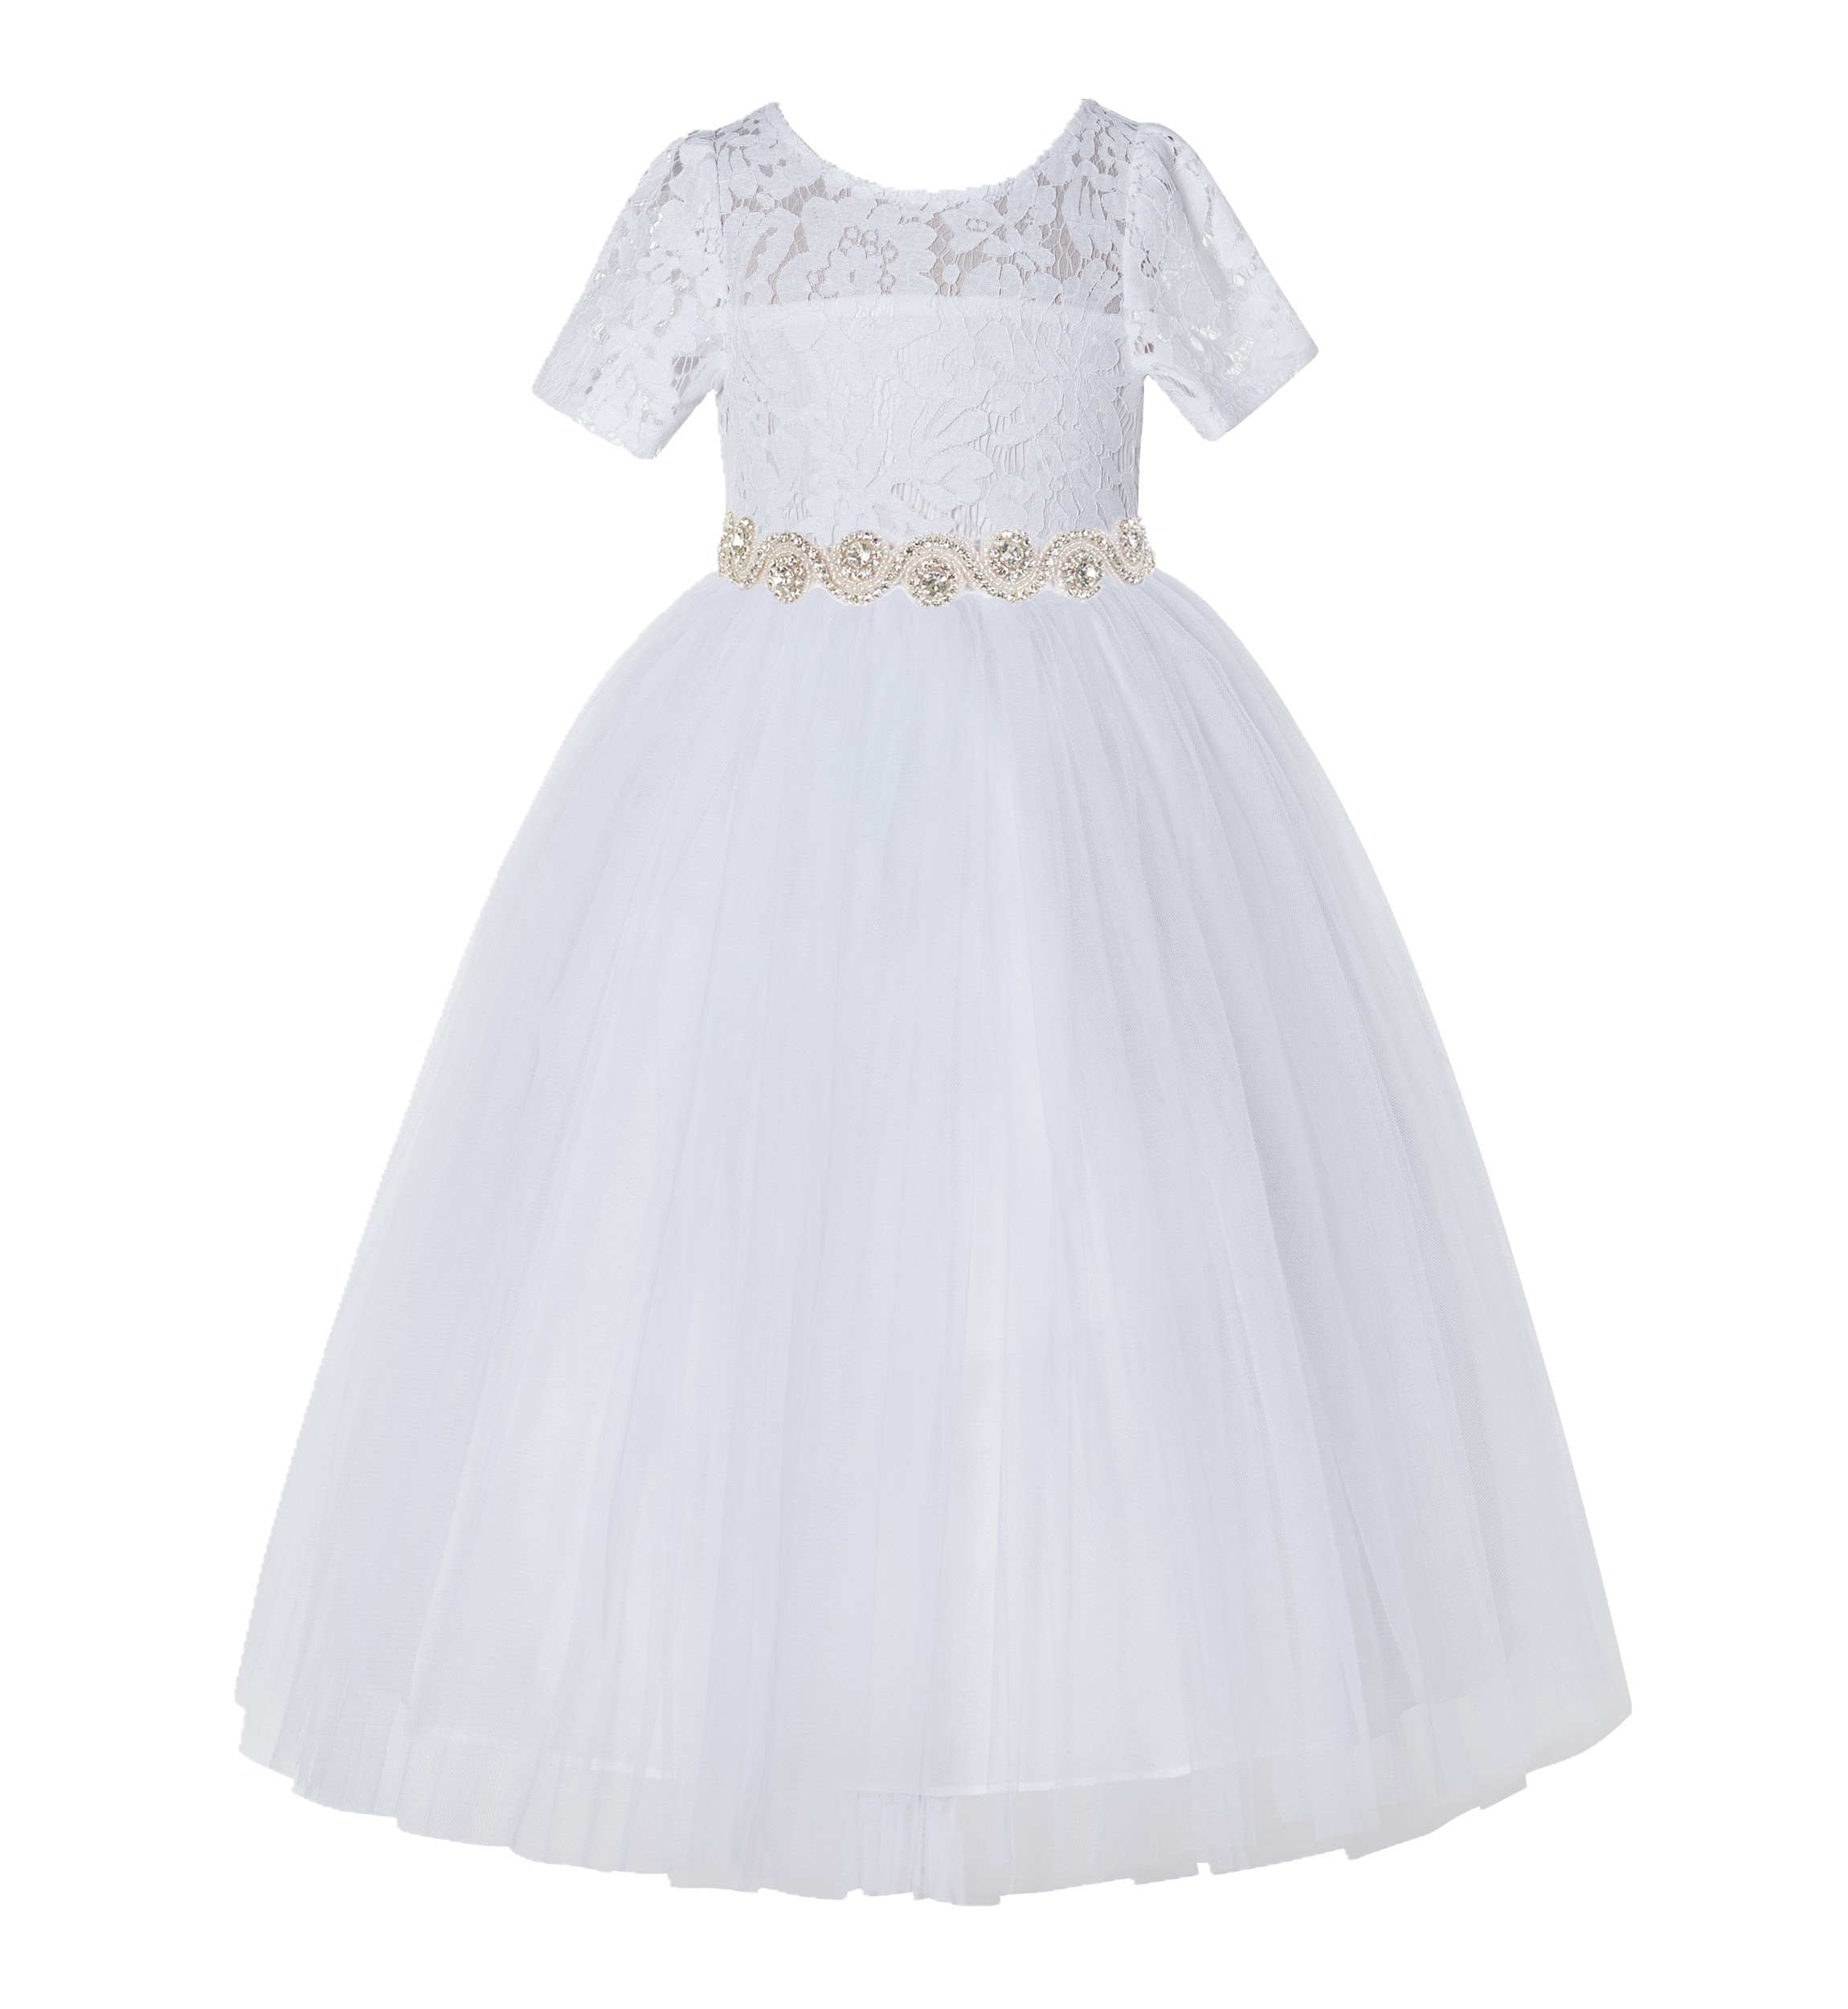 White / Blush Pink Floral Lace Flower Girl Dress Communion Dress LG2